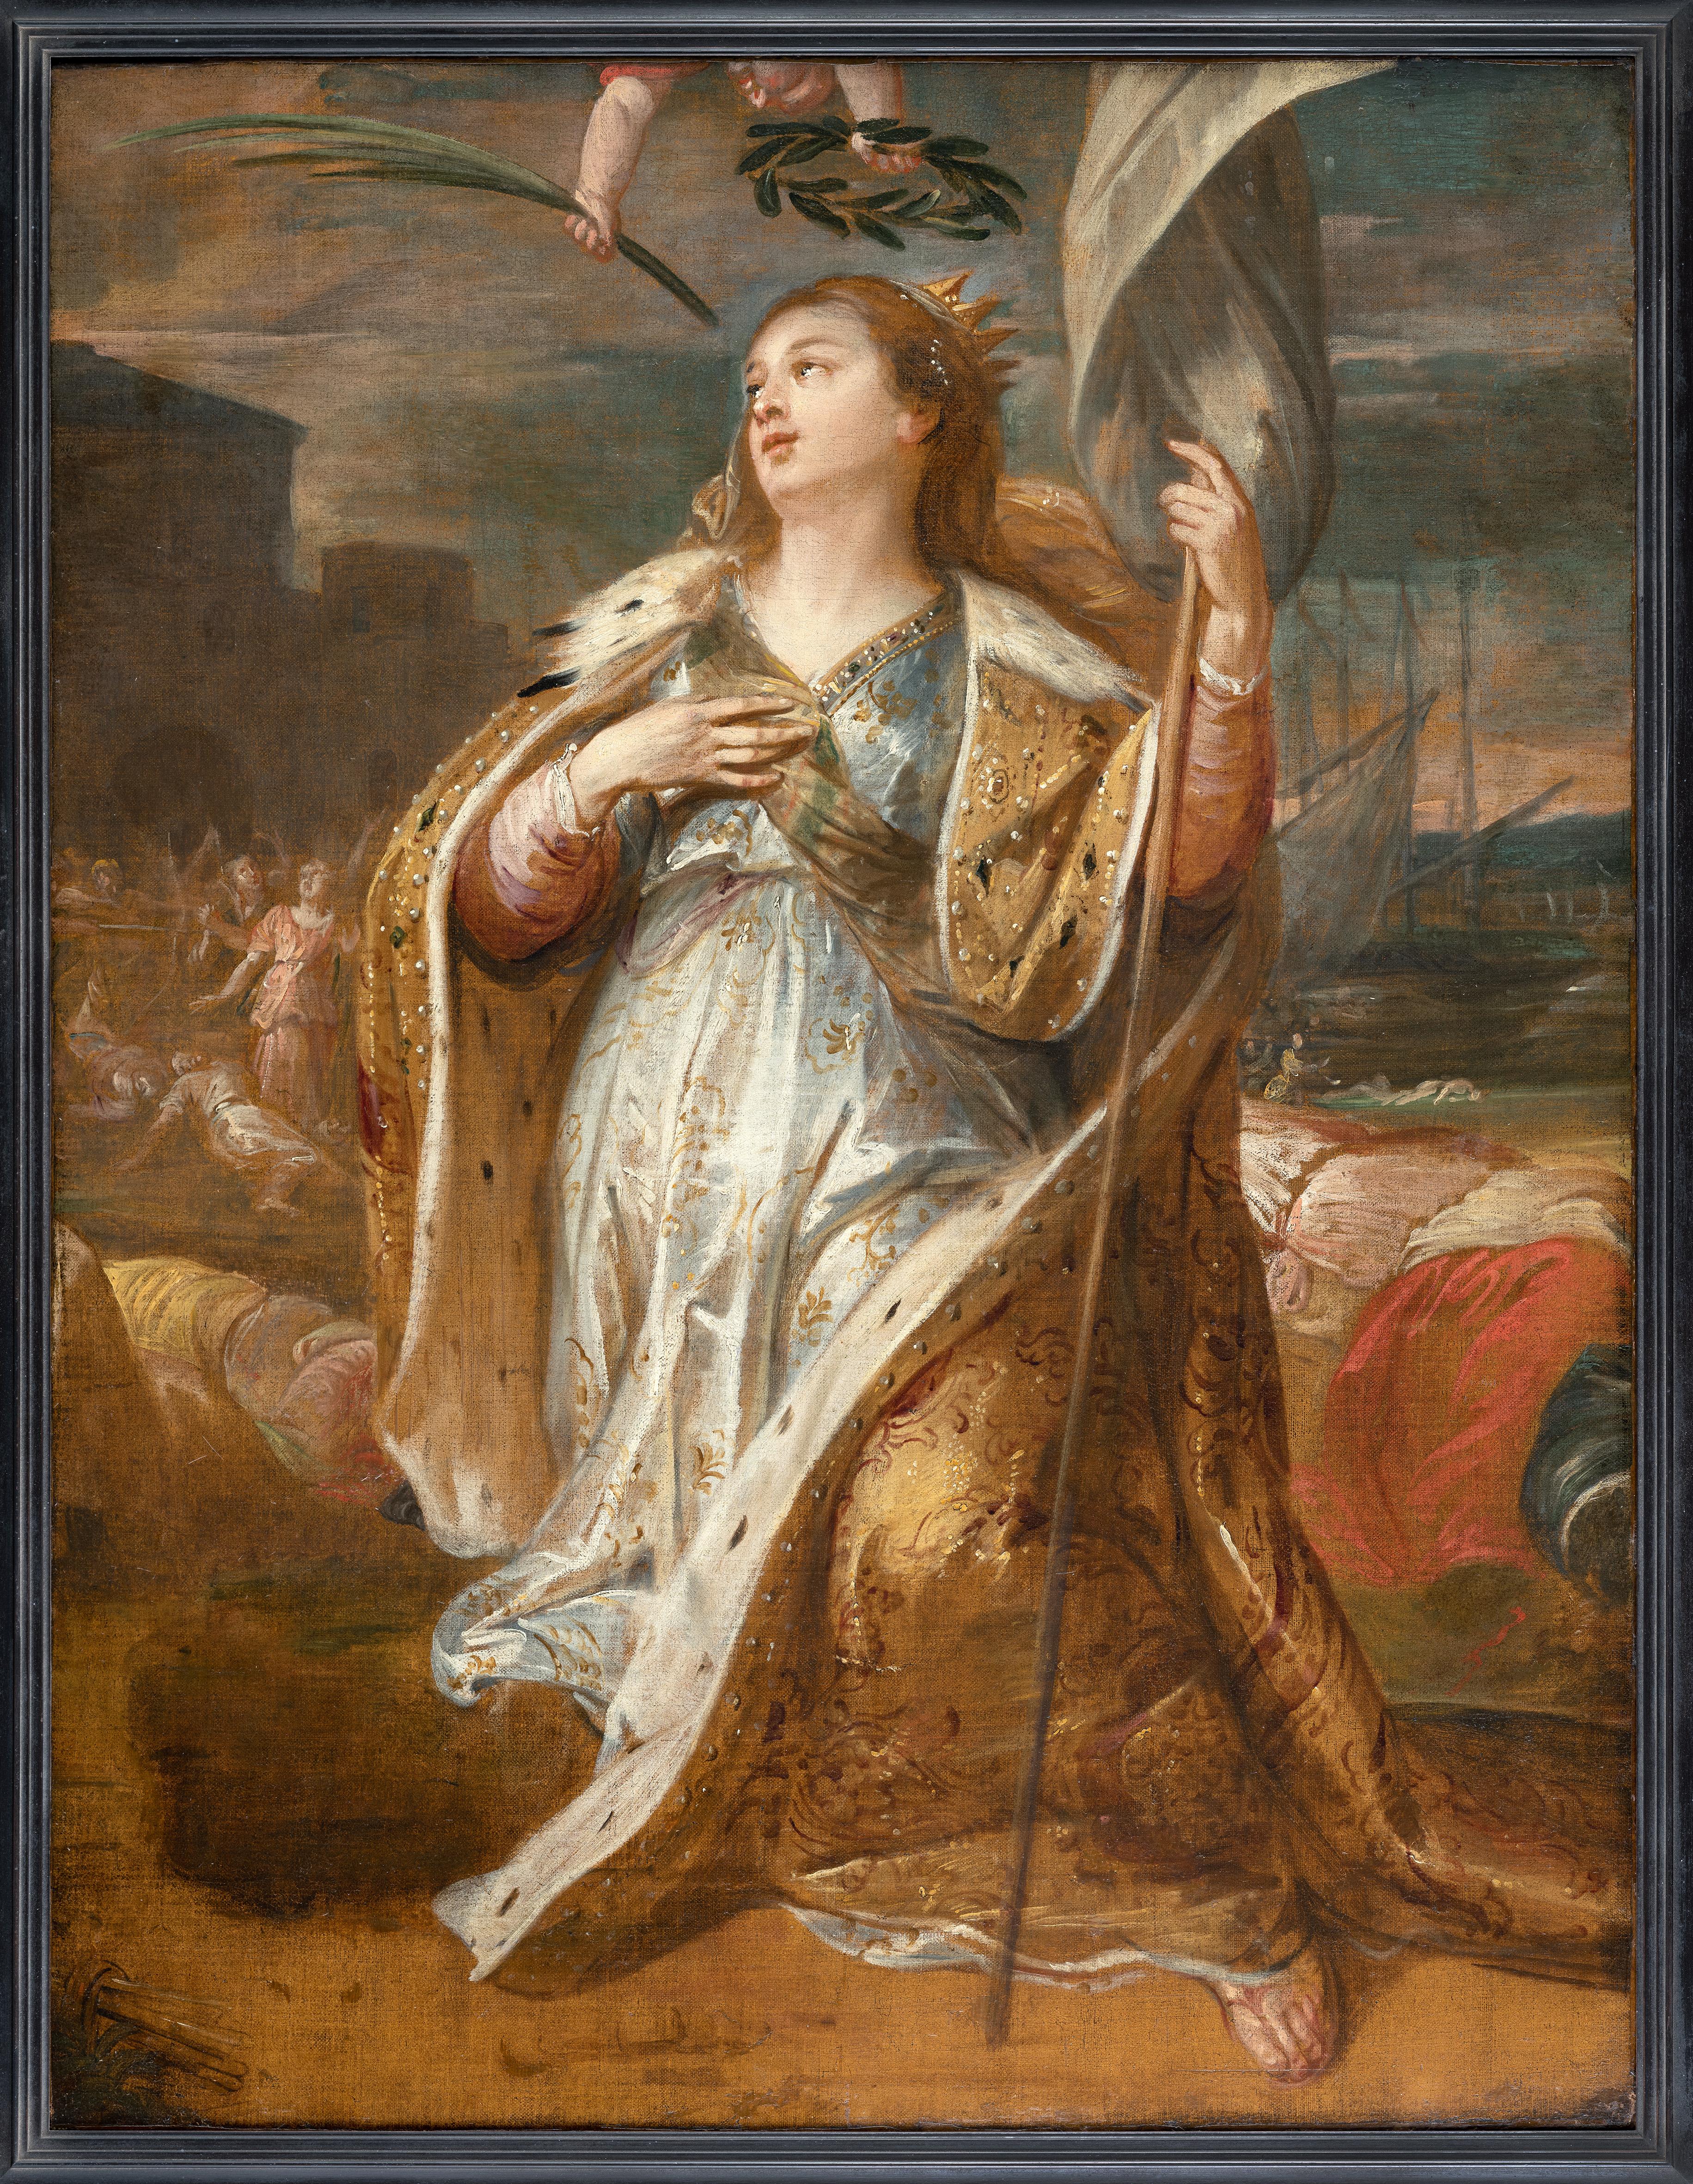 Boeckhorst, Rubens, Saint Ursula, Decorative Old Master, Woman, Baroque, Flemish